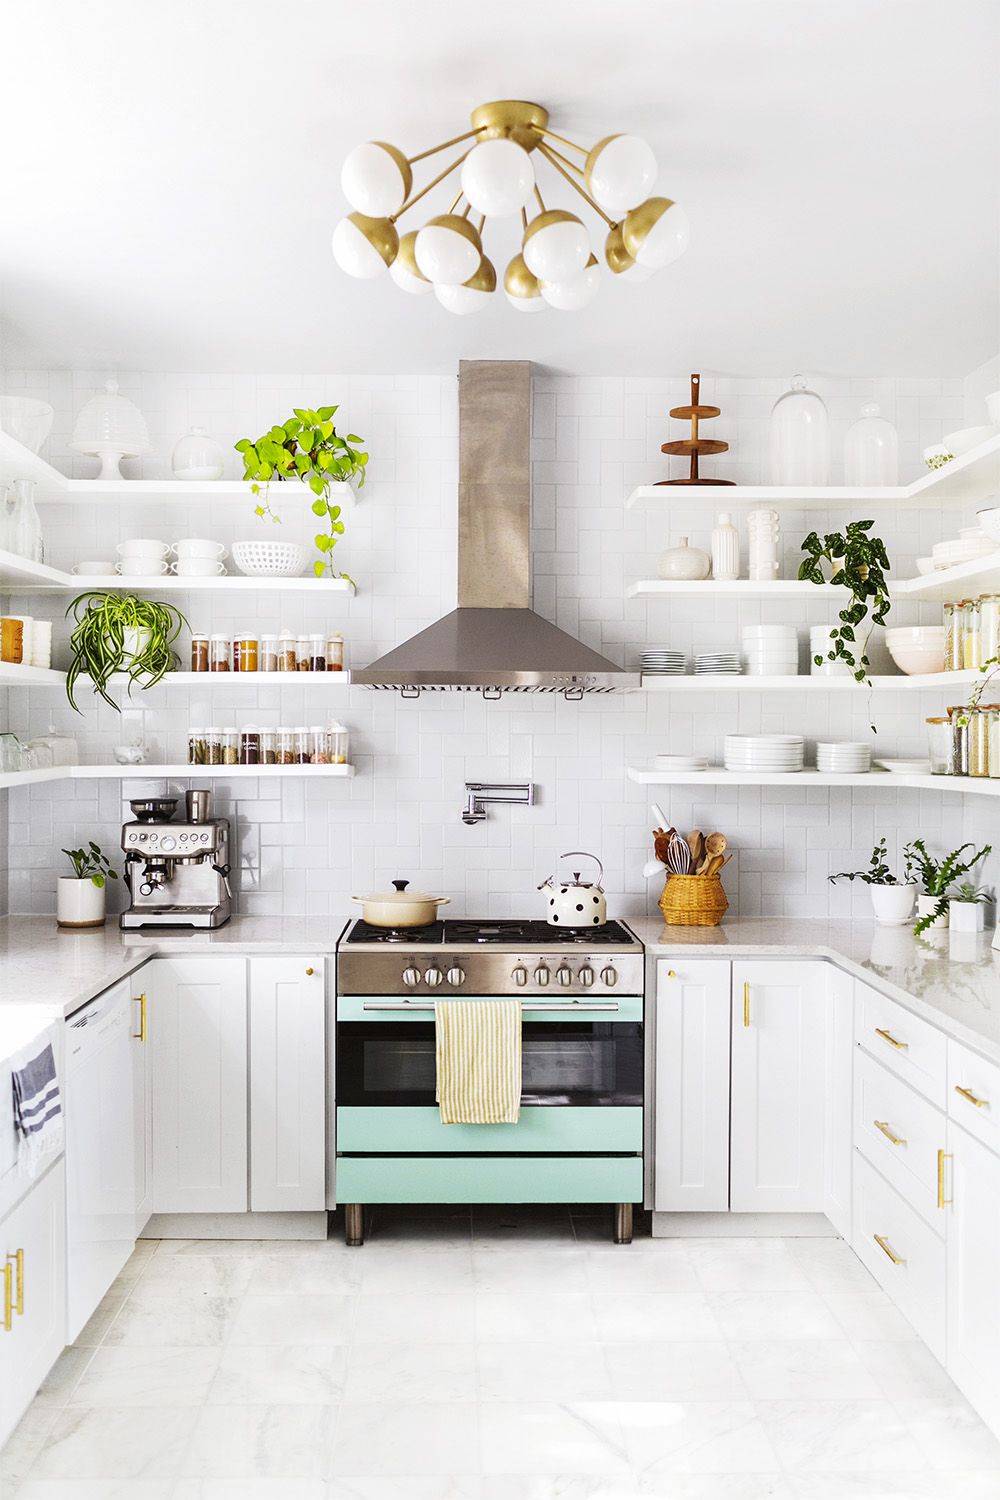 25 Best Kitchen Ideas   Decor and Decorating Ideas for Kitchen Design